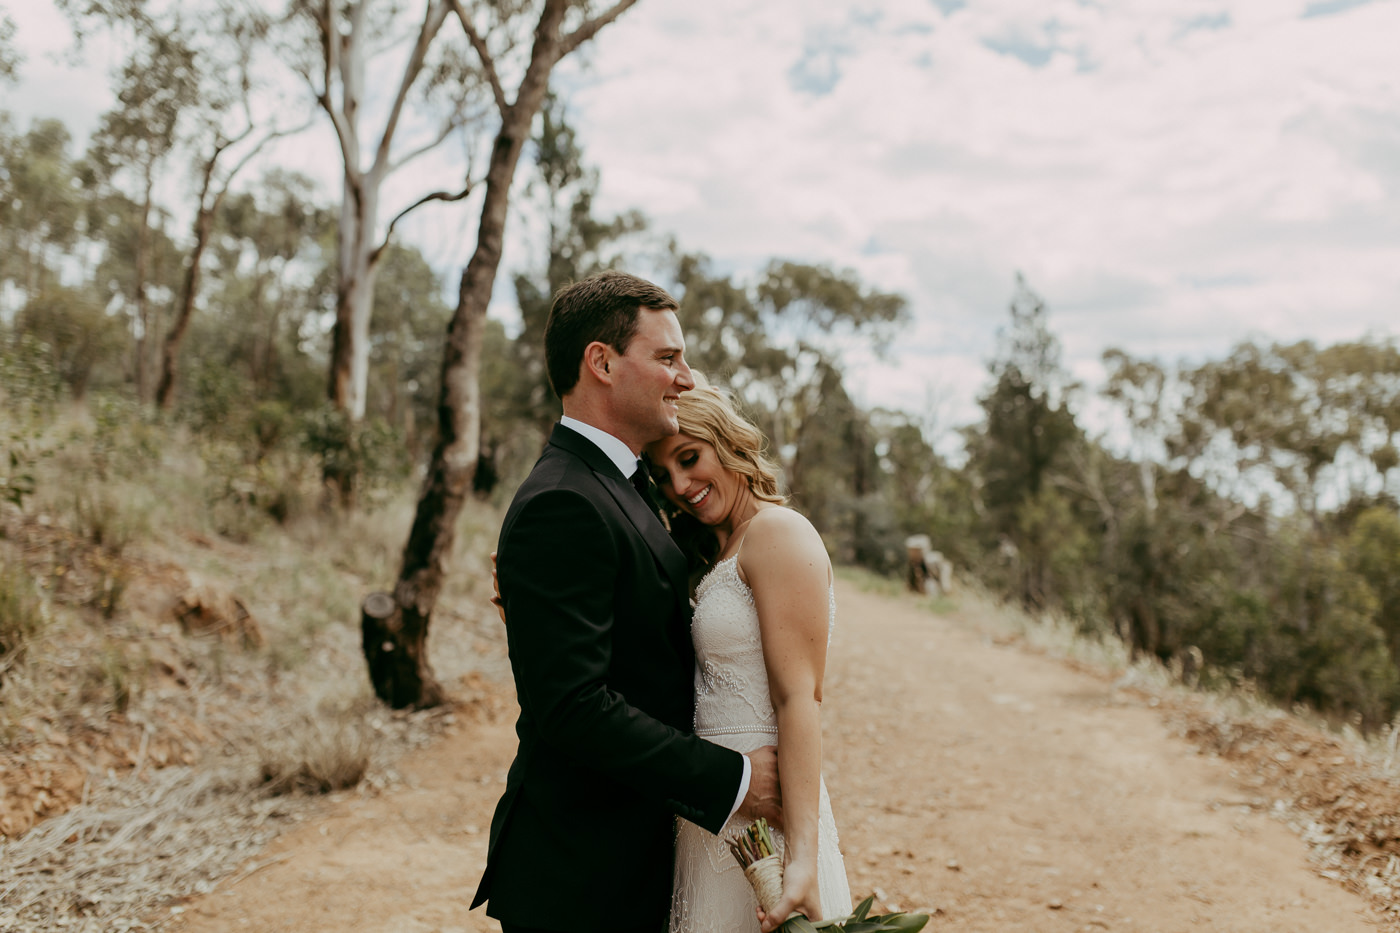 Anthony & Eliet - Wagga Wagga Wedding - Country NSW - Samantha Heather Photography-54.jpg